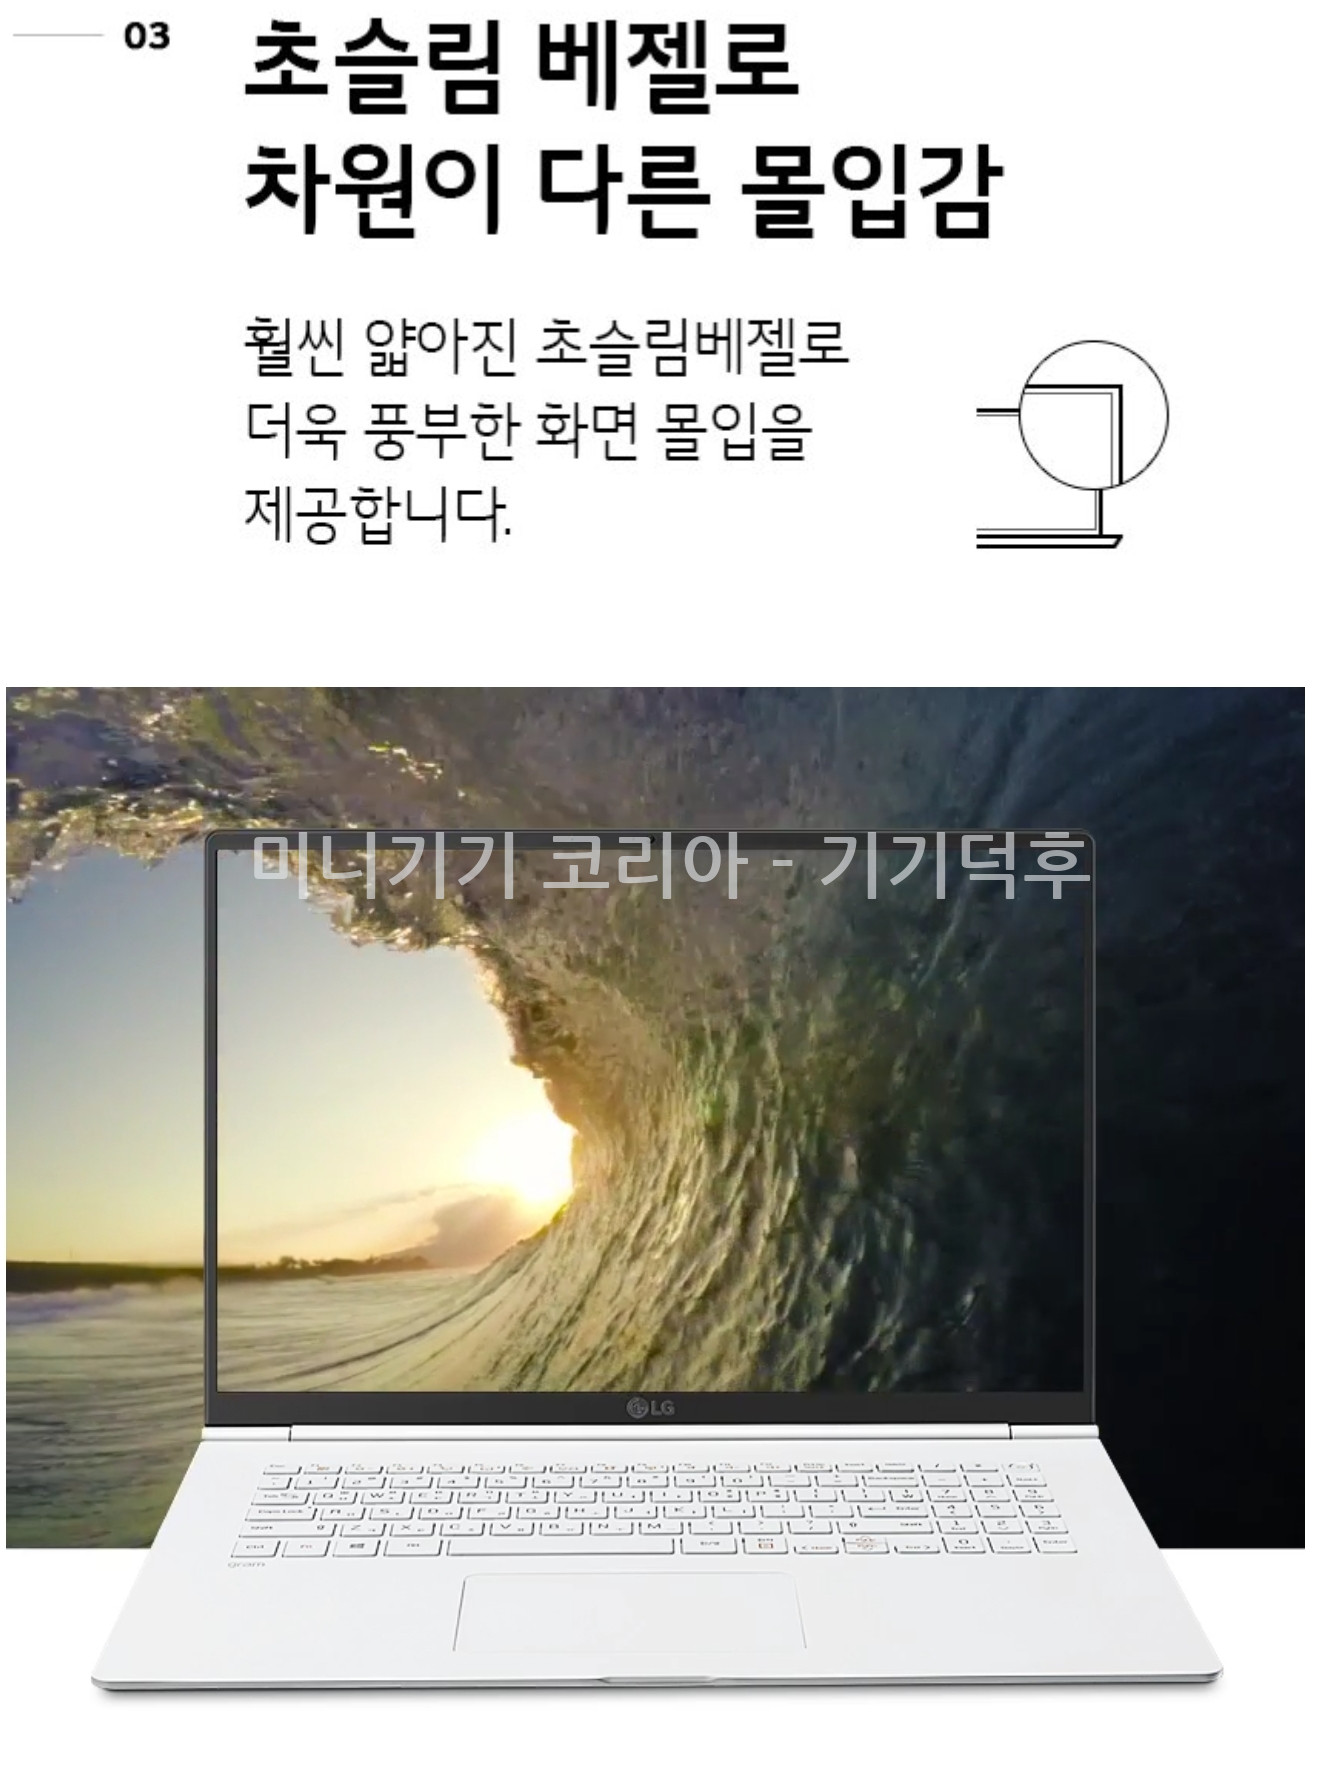 SmartSelect_20181215-011618_Samsung Internet.jpg